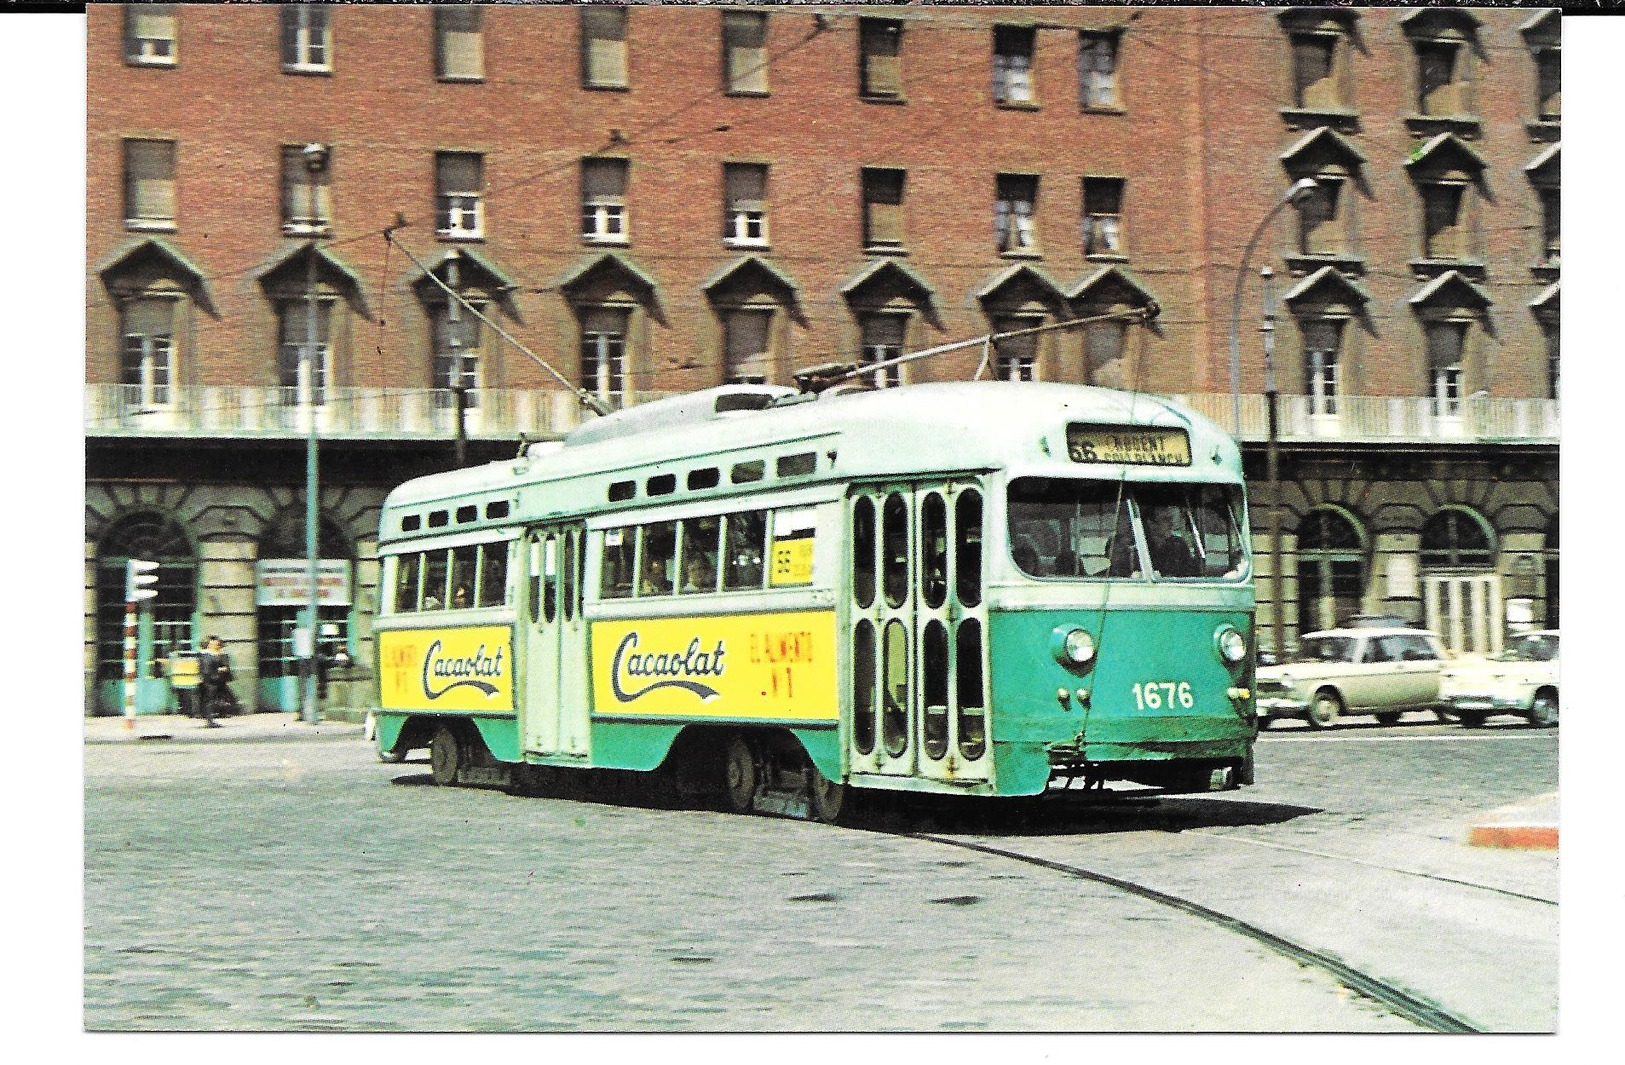 Cpsm Tram- Vies De Barcelona / Cotxe 1676 - Contruit A 1945 Per St.Louis Car (USA) / Photo 1969. - Barcelona